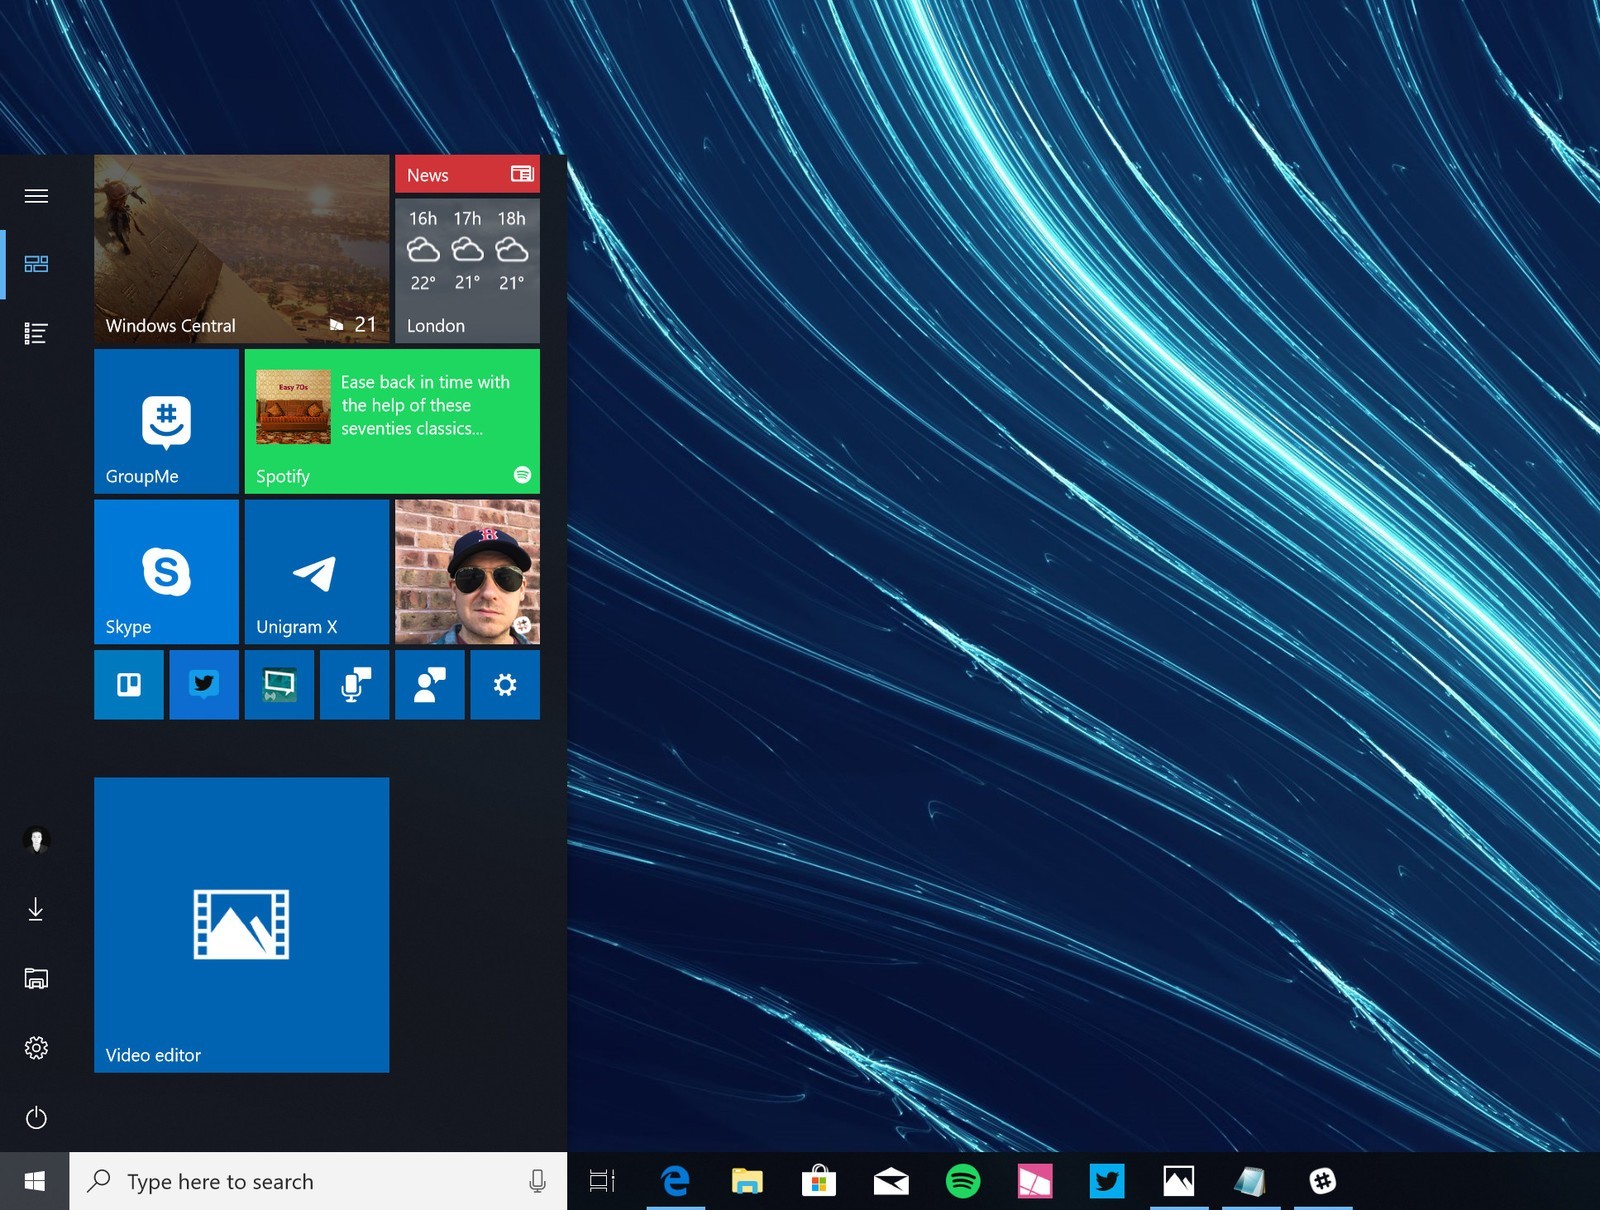 Microsoft "Releases" a Surprising Windows 10 Video Editor ...